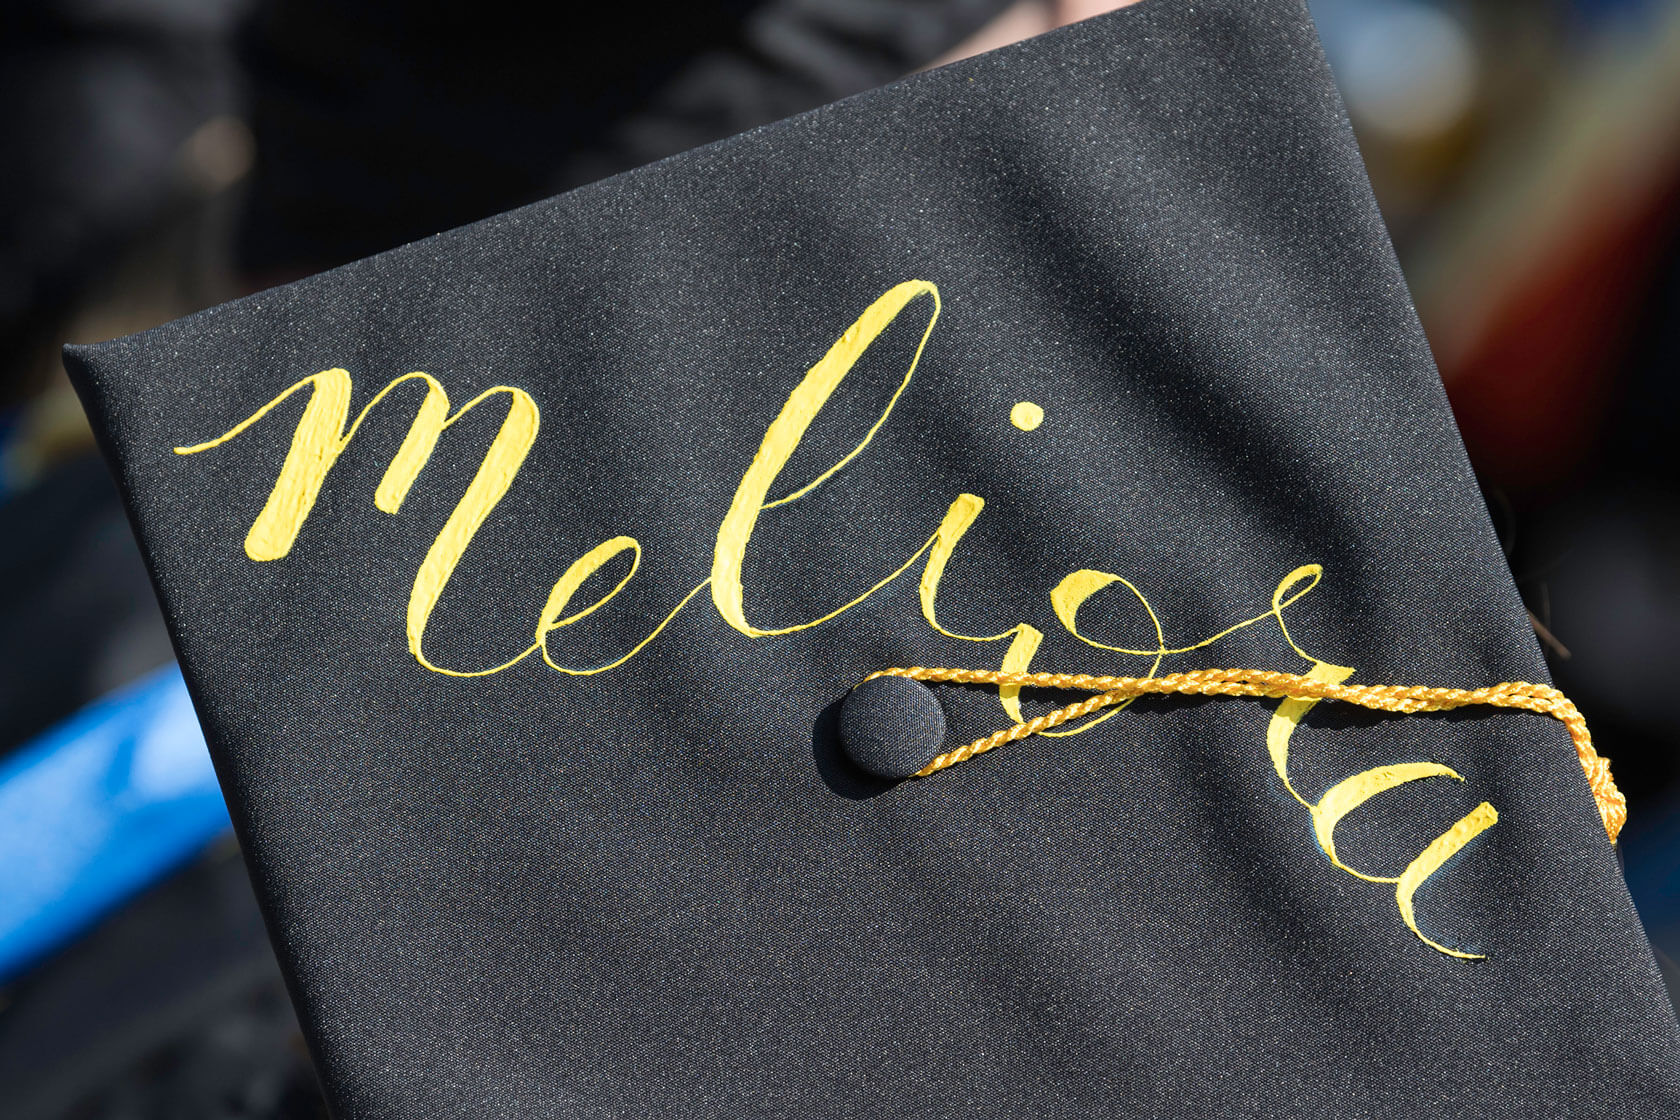 Meliora hand painted on a graduation cap.